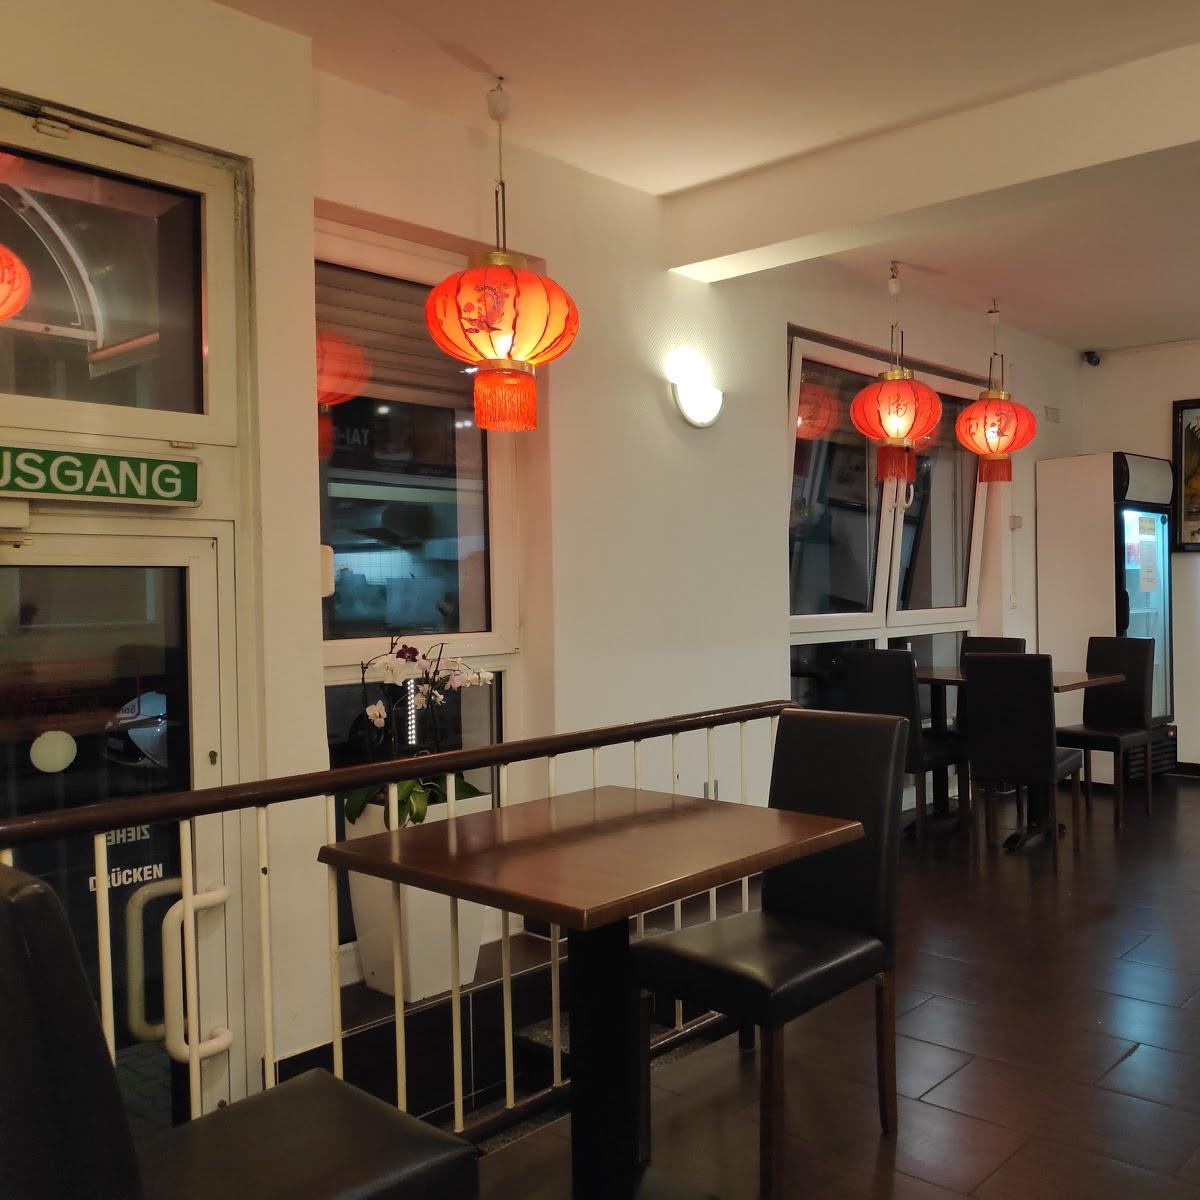 Restaurant "Tai Phat Imbiss" in Gießen